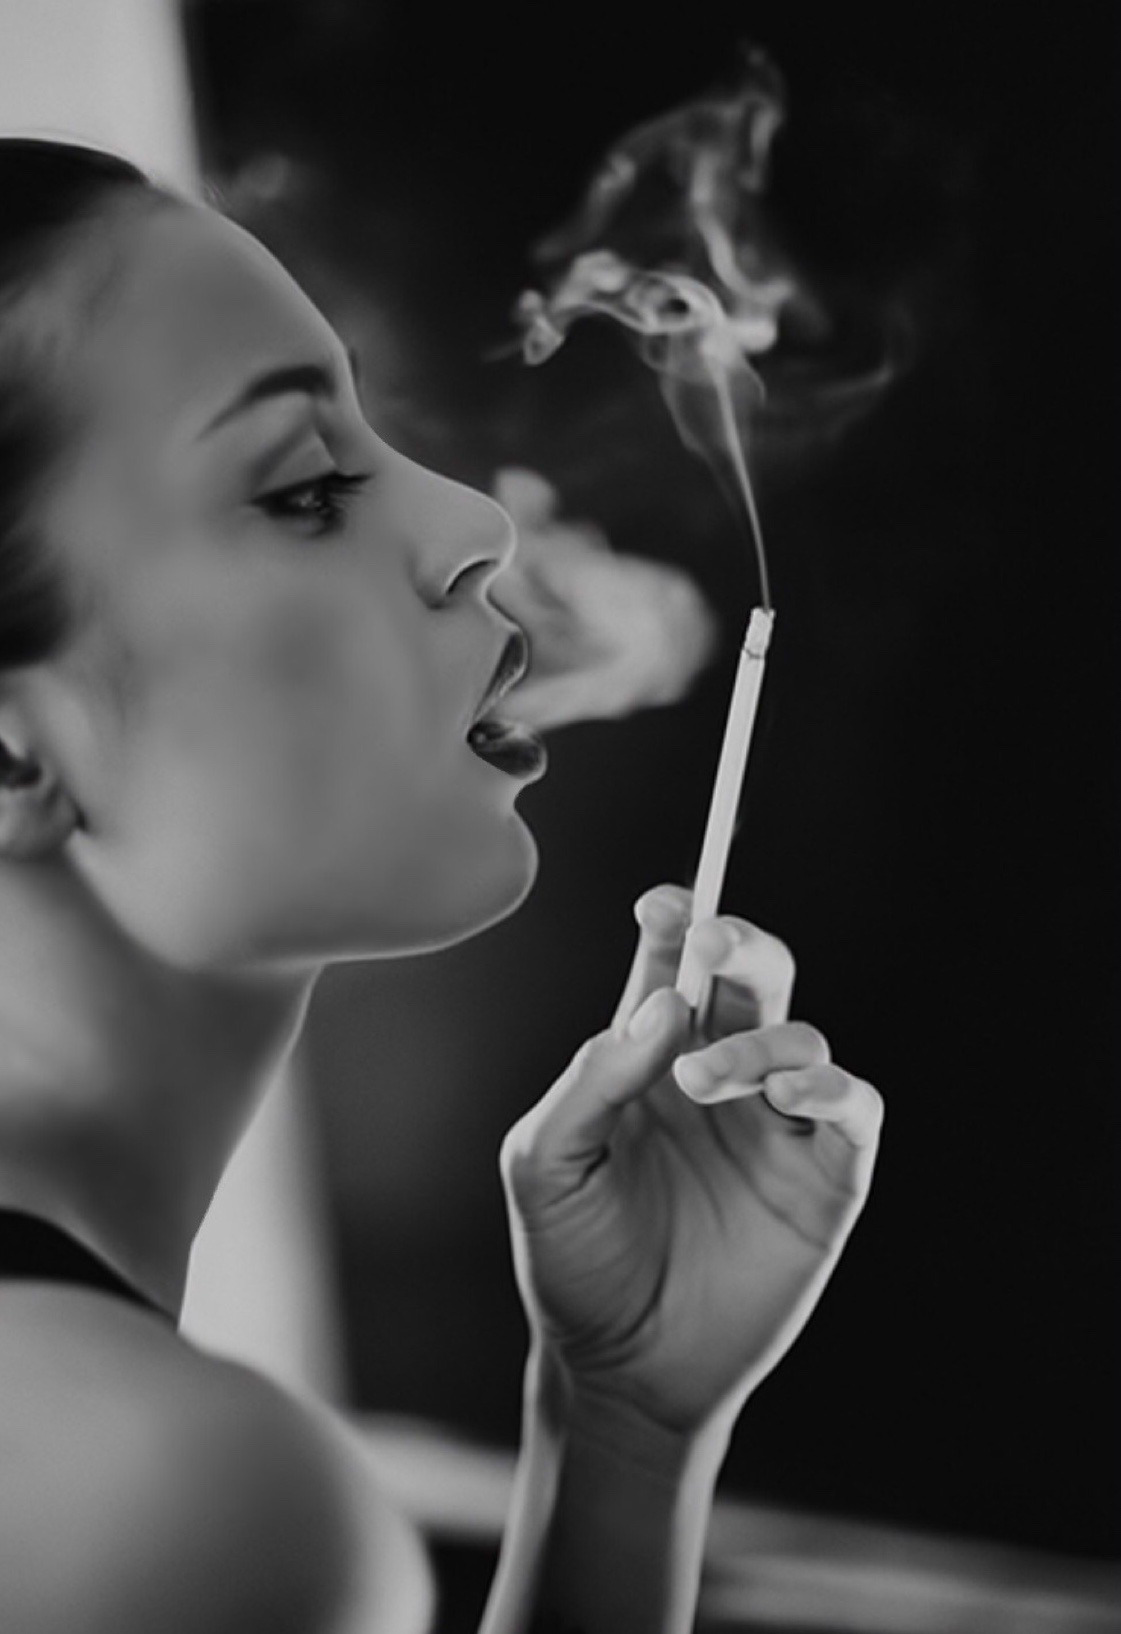 Канал бабская курилка. Курящая девушка. Женщина с сигаретой. Женщина с сигарой. Красивая курящая девушка.